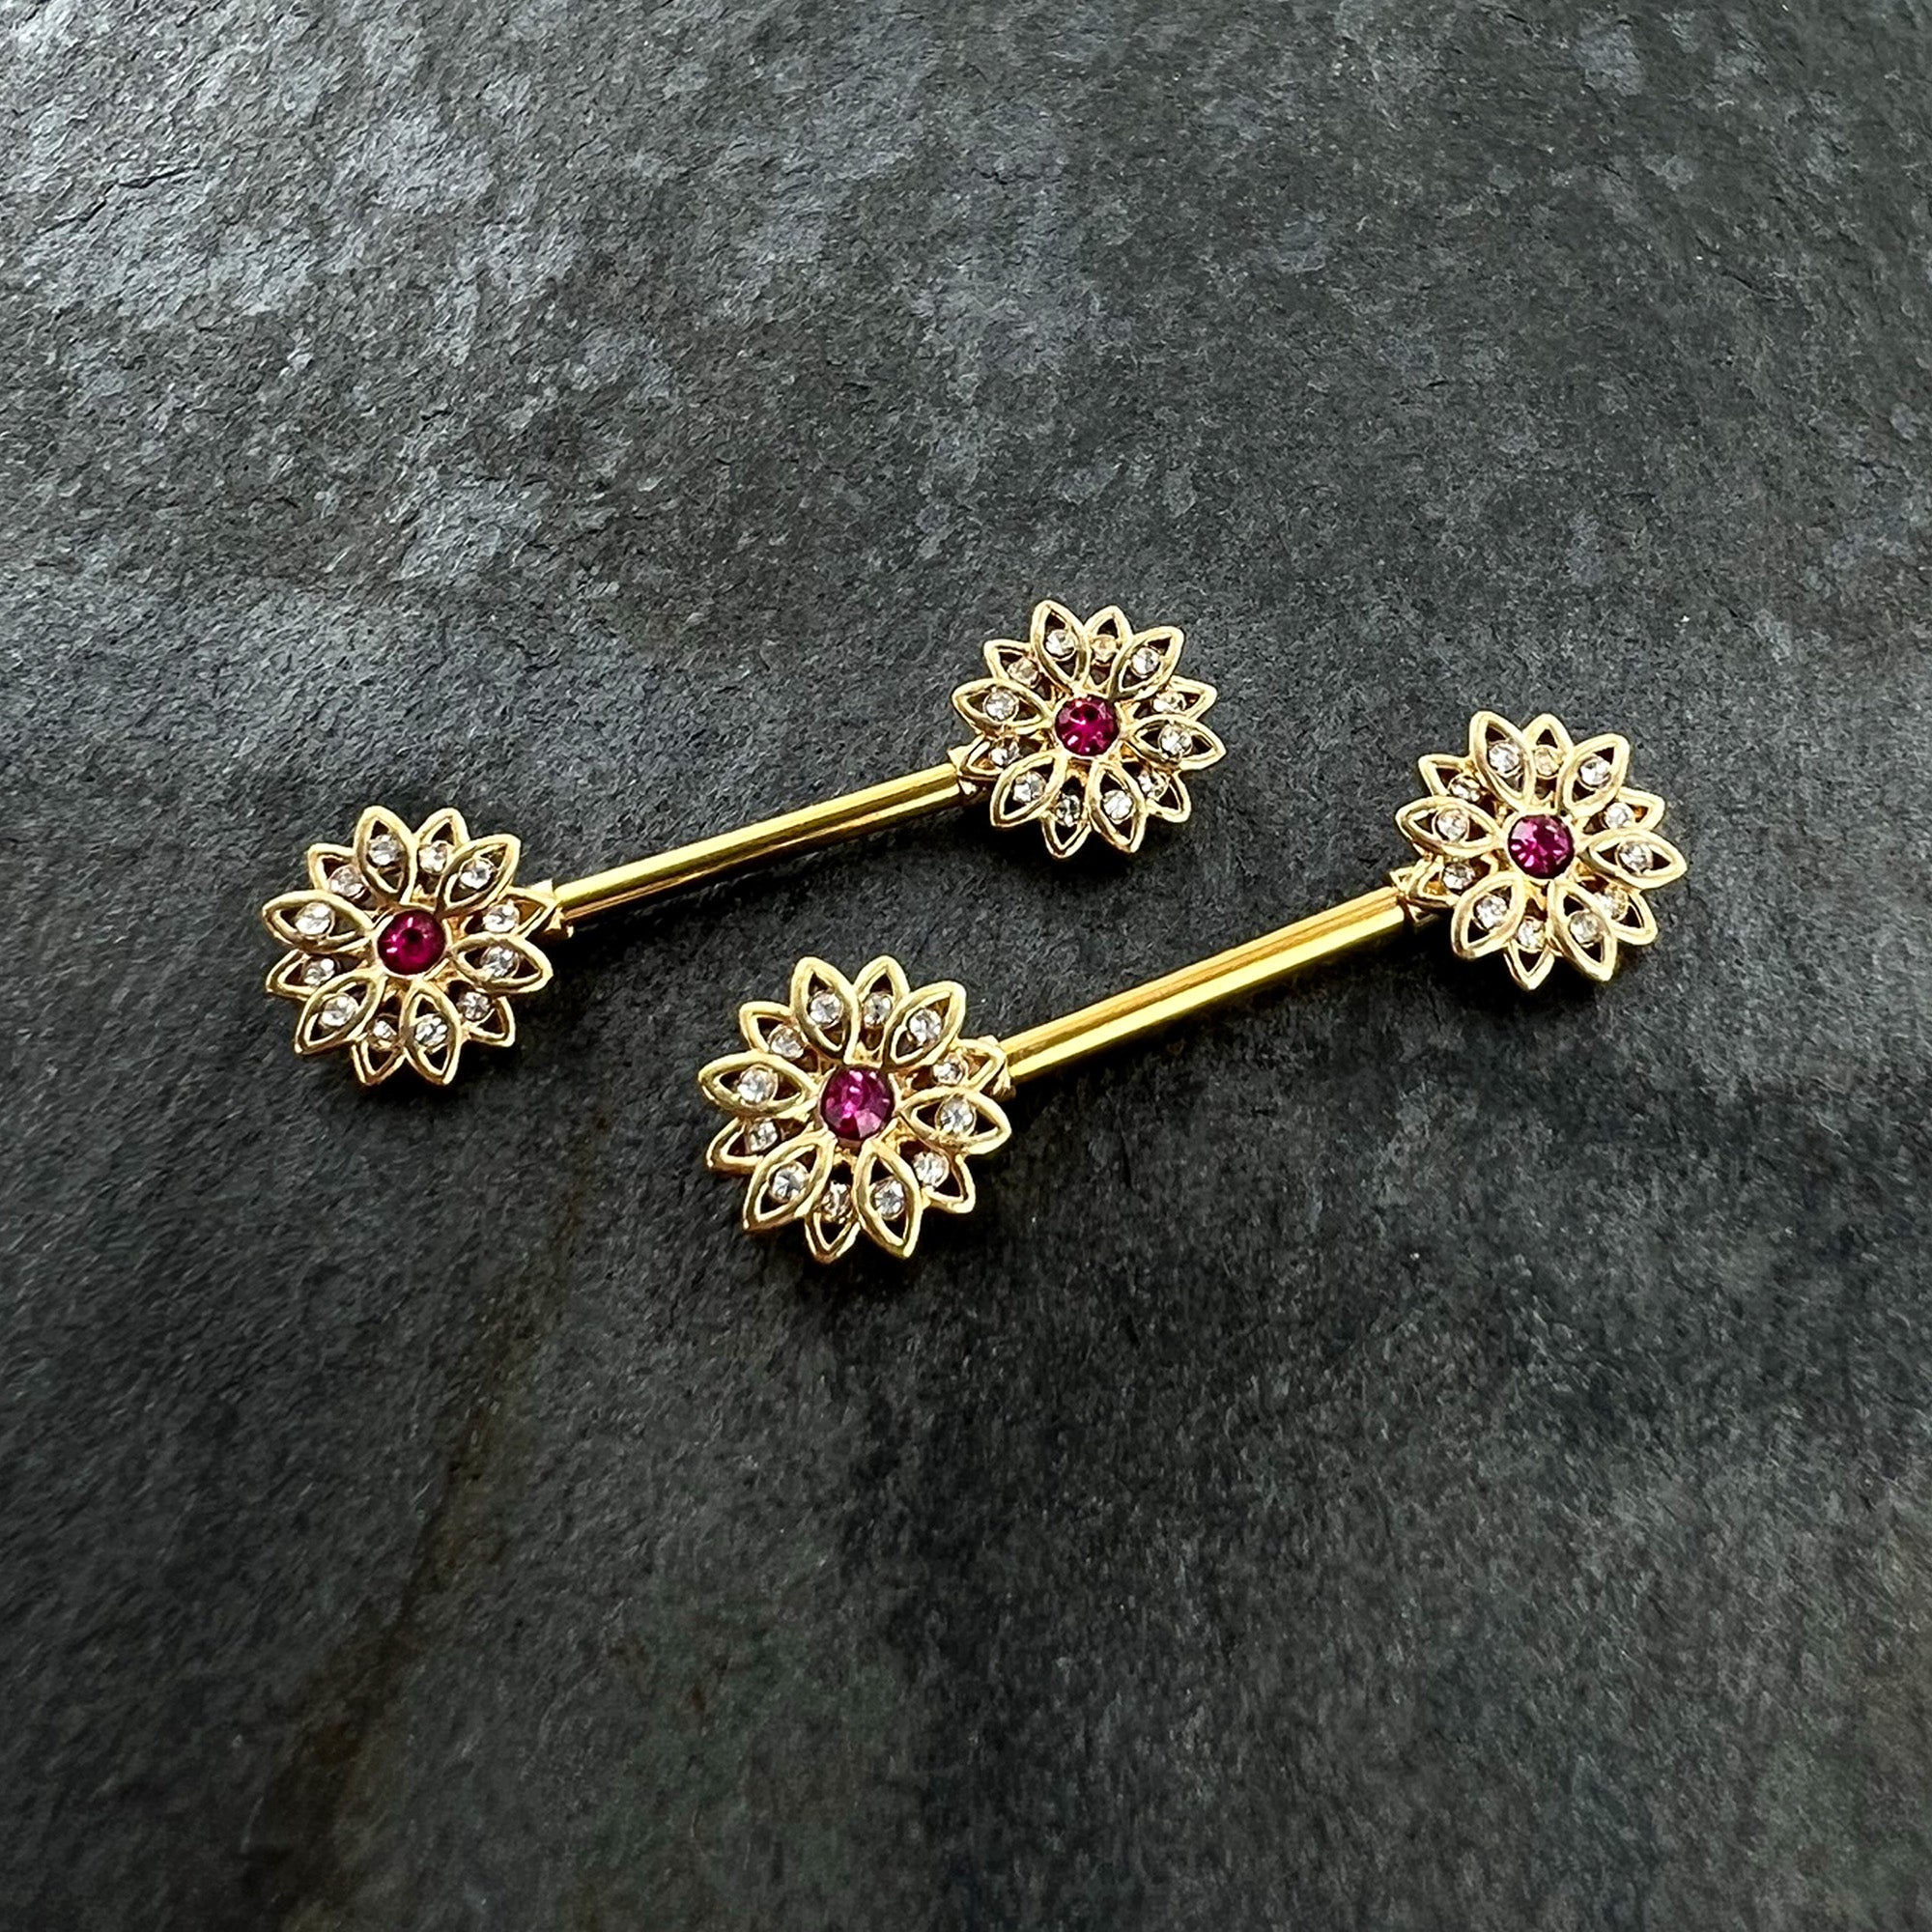 14 Gauge 9/16 Clear Pink Gem Gold Tone Starry Flower Nipple Ring Set